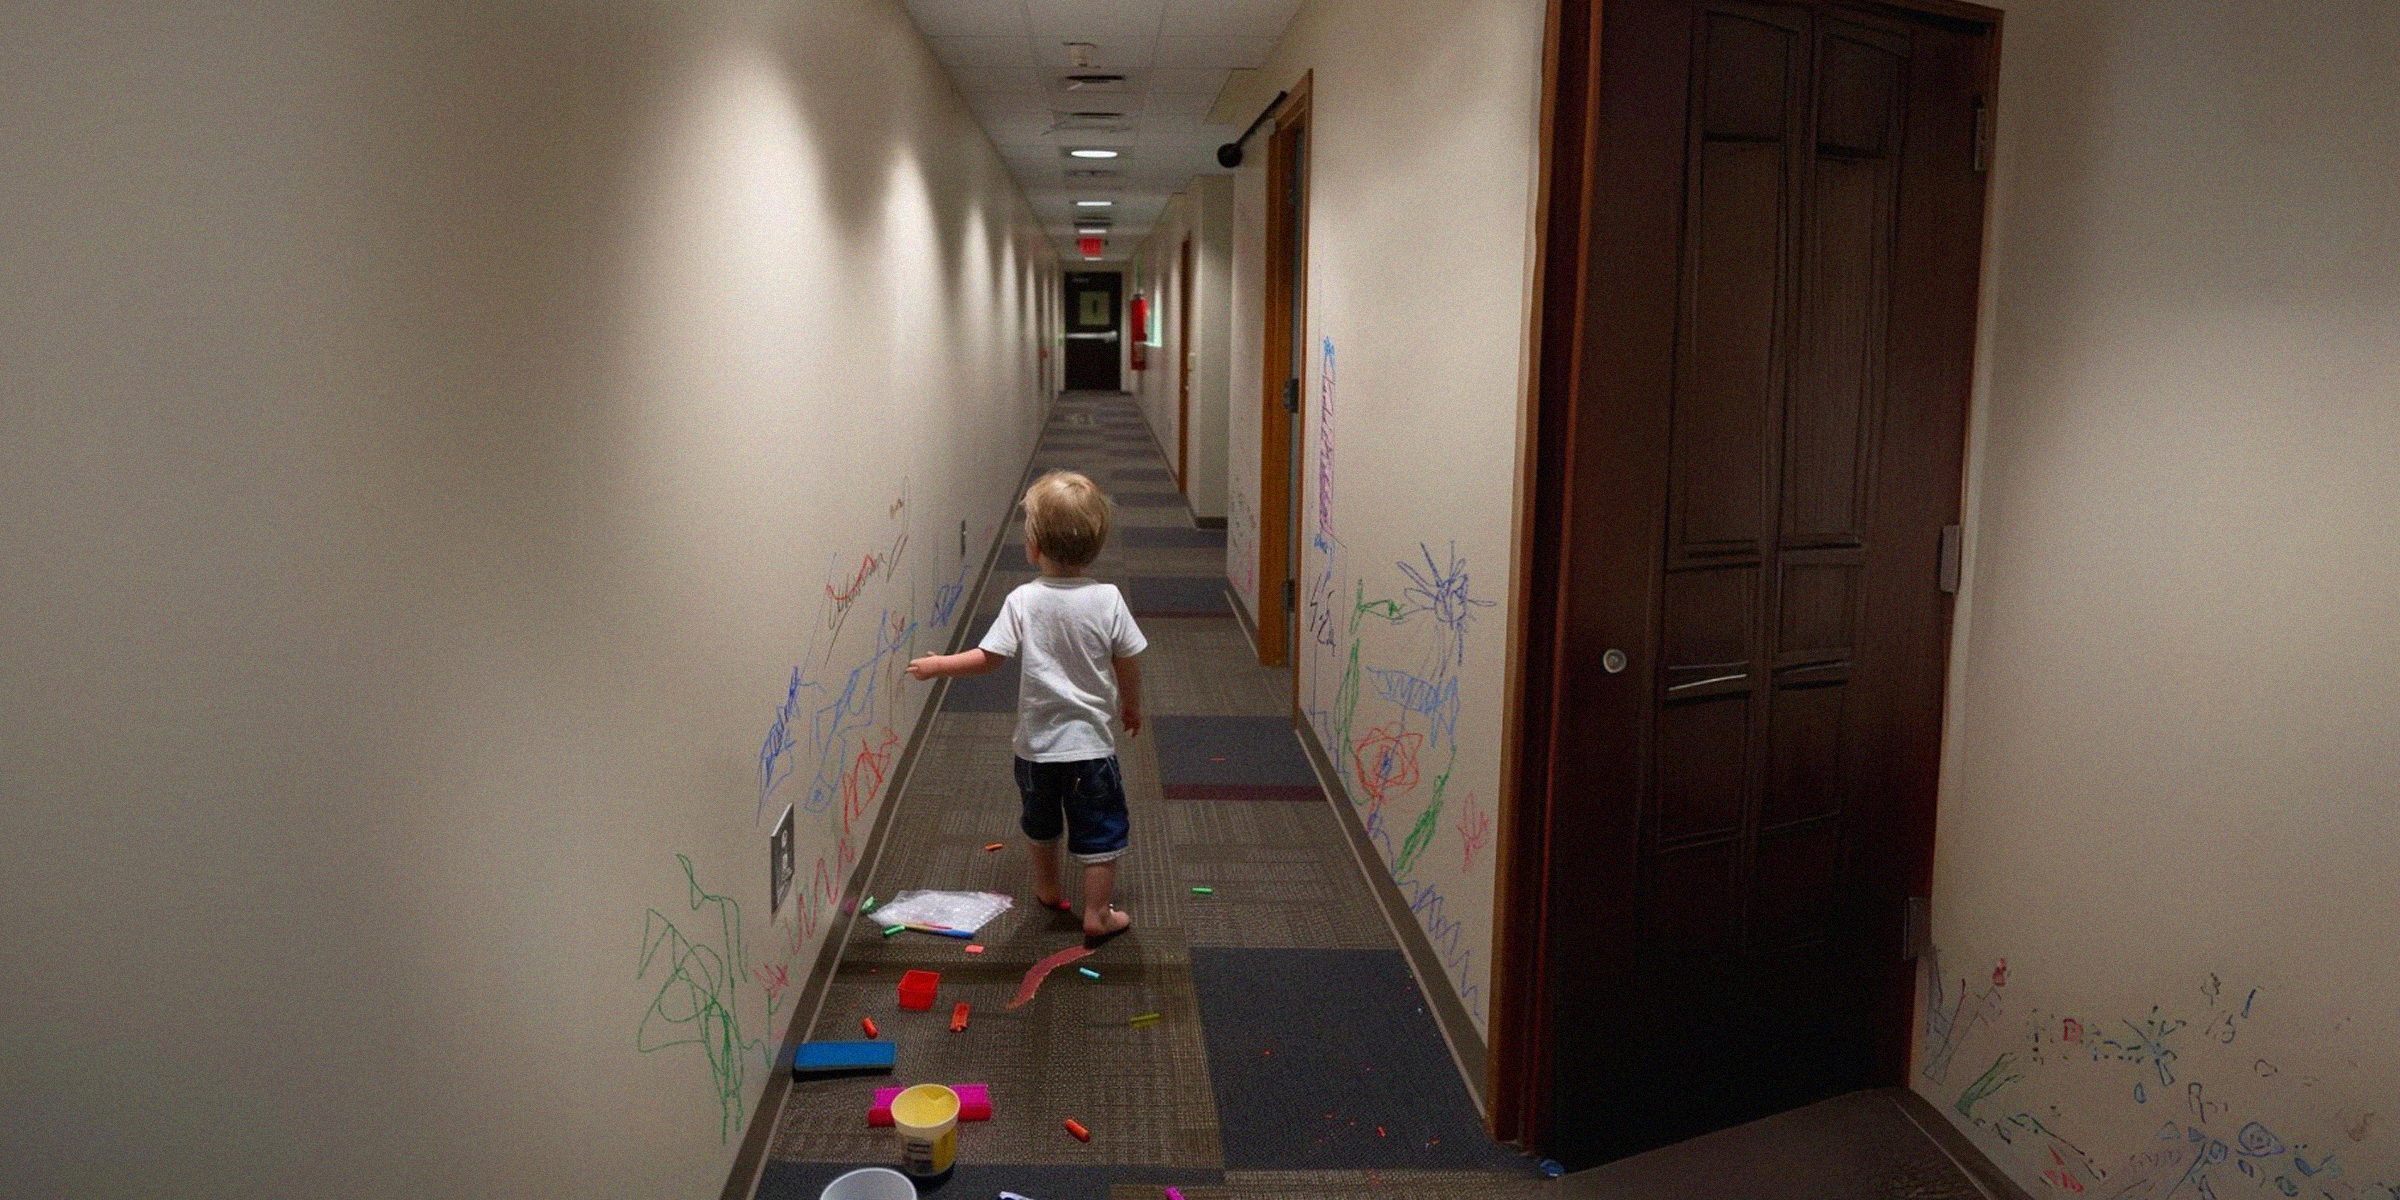 A little boy drawing on hallway walls | Source: AmoMama